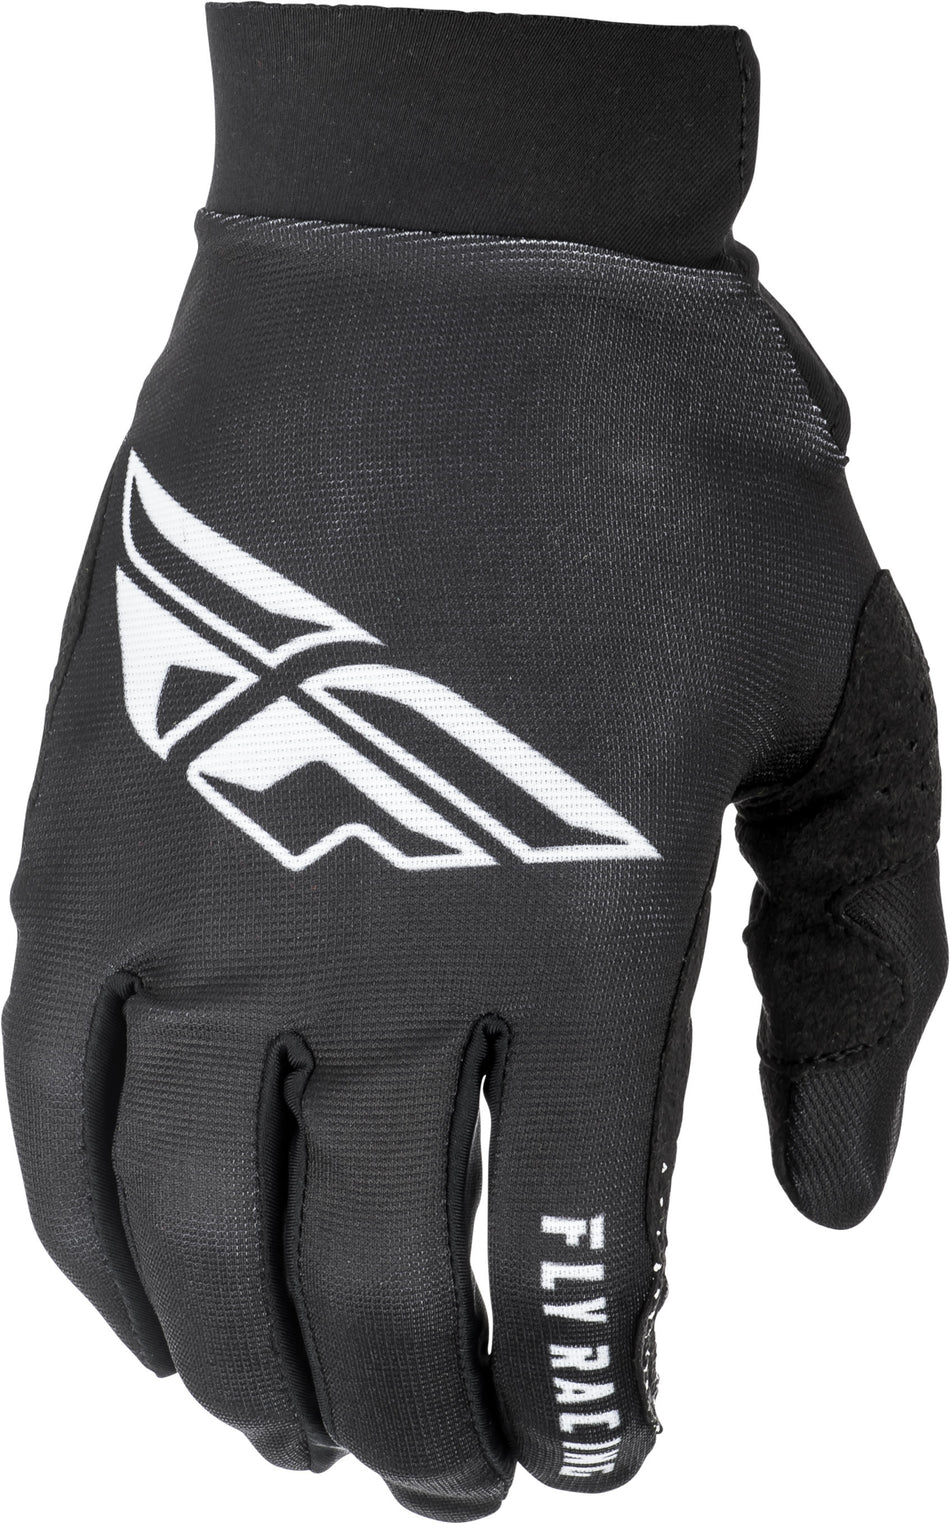 FLY RACING Pro Lite Gloves Black/White Sz 11 372-81011